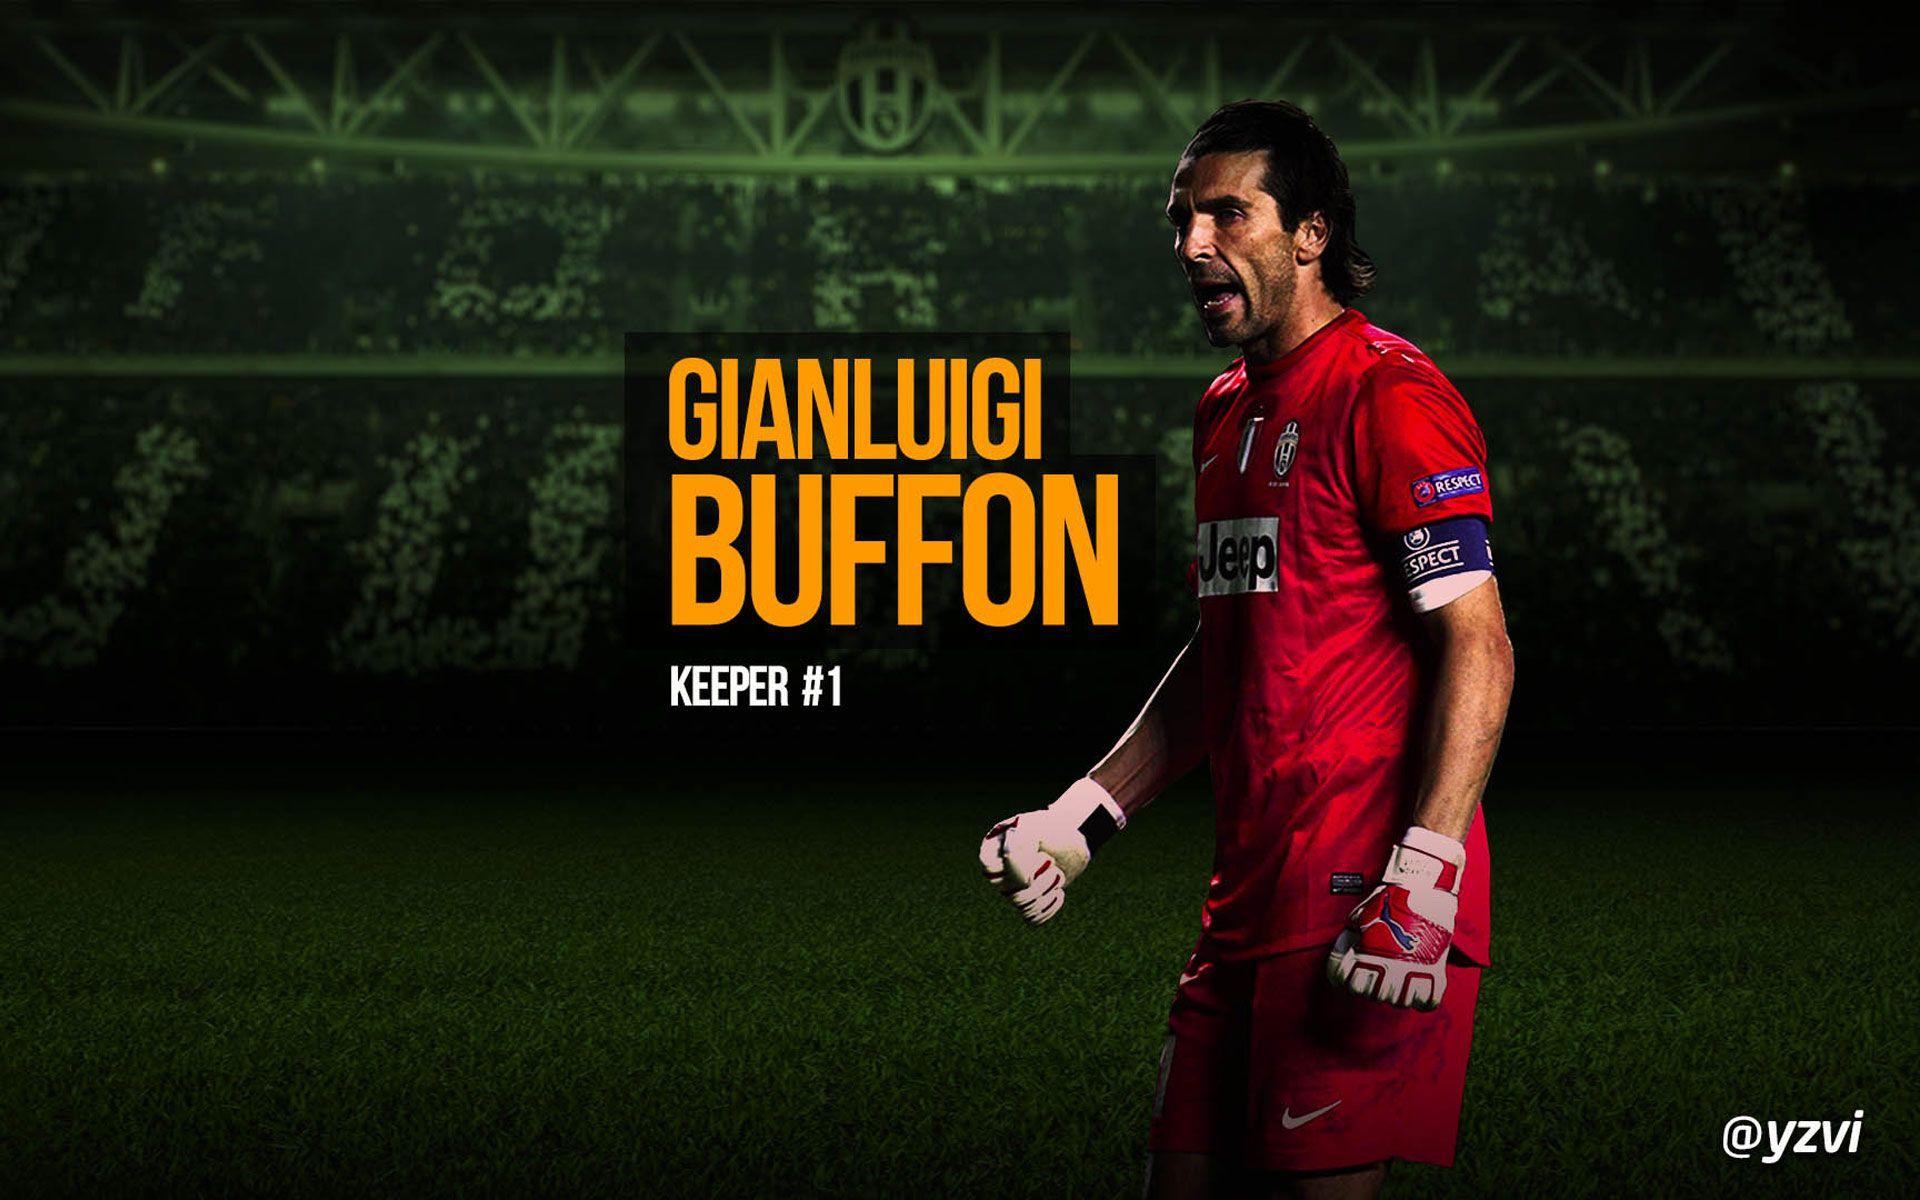 جانلوئیجی بوفون (Gianluigi Buffon)